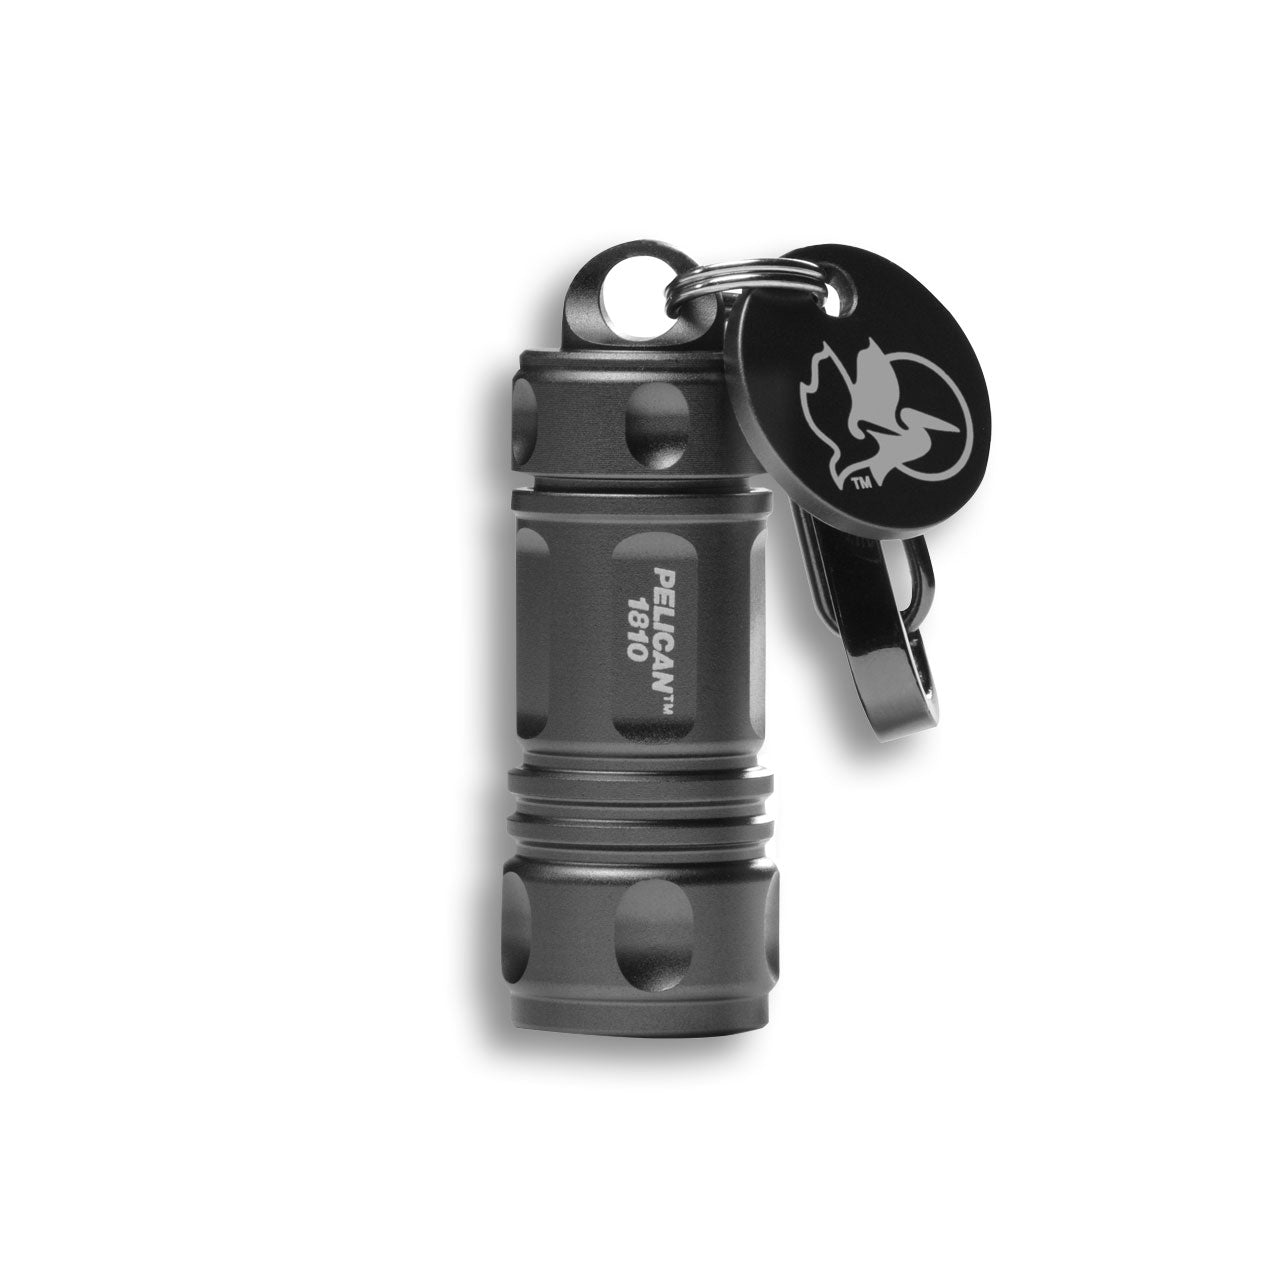 Pelican Keychain Flashlight | Uncrate